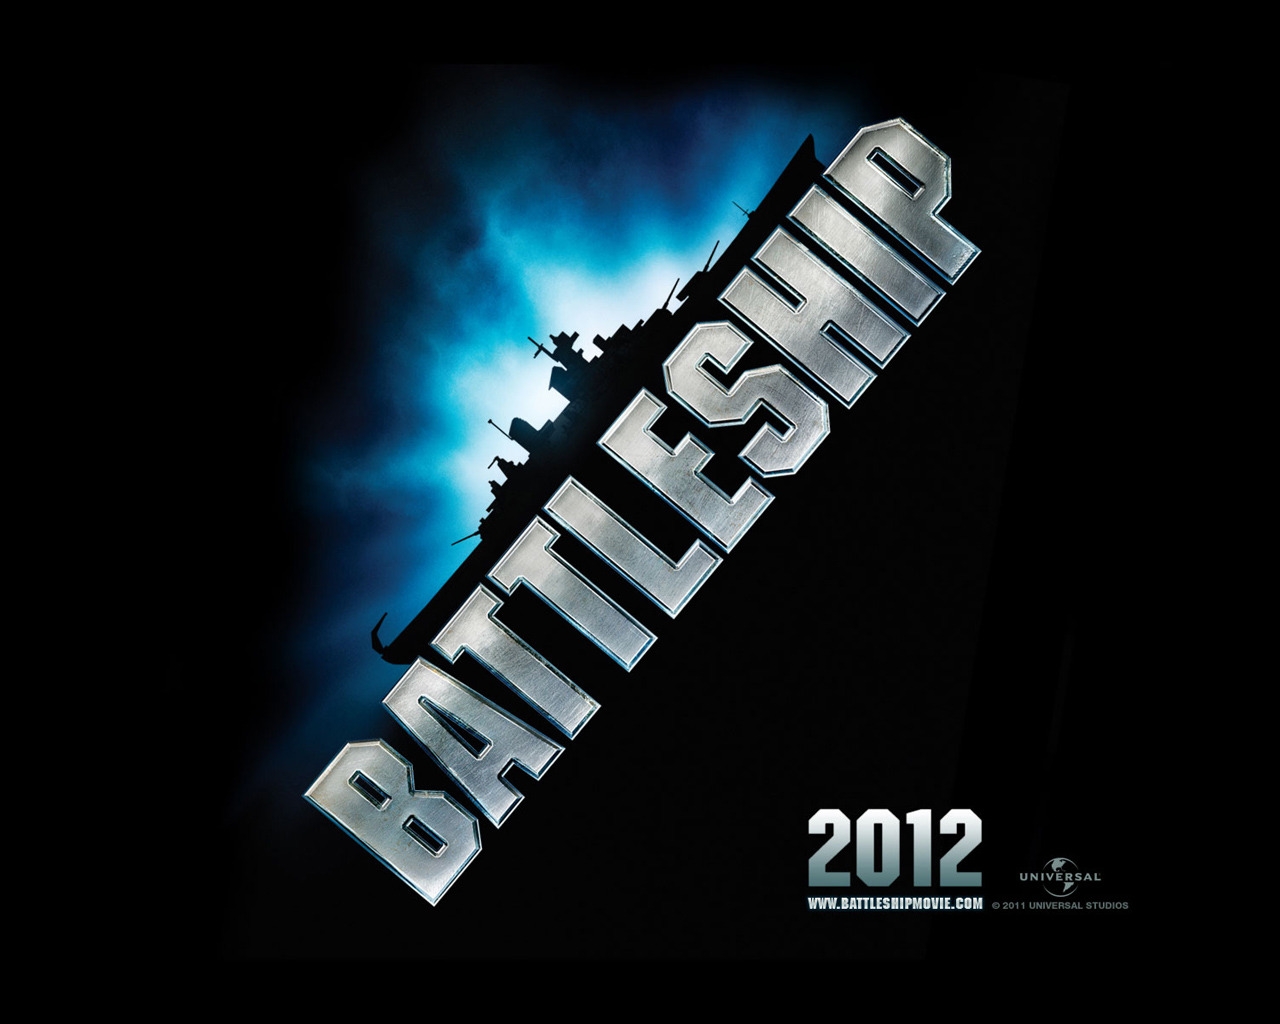 Battleship Movie for 1280 x 1024 resolution